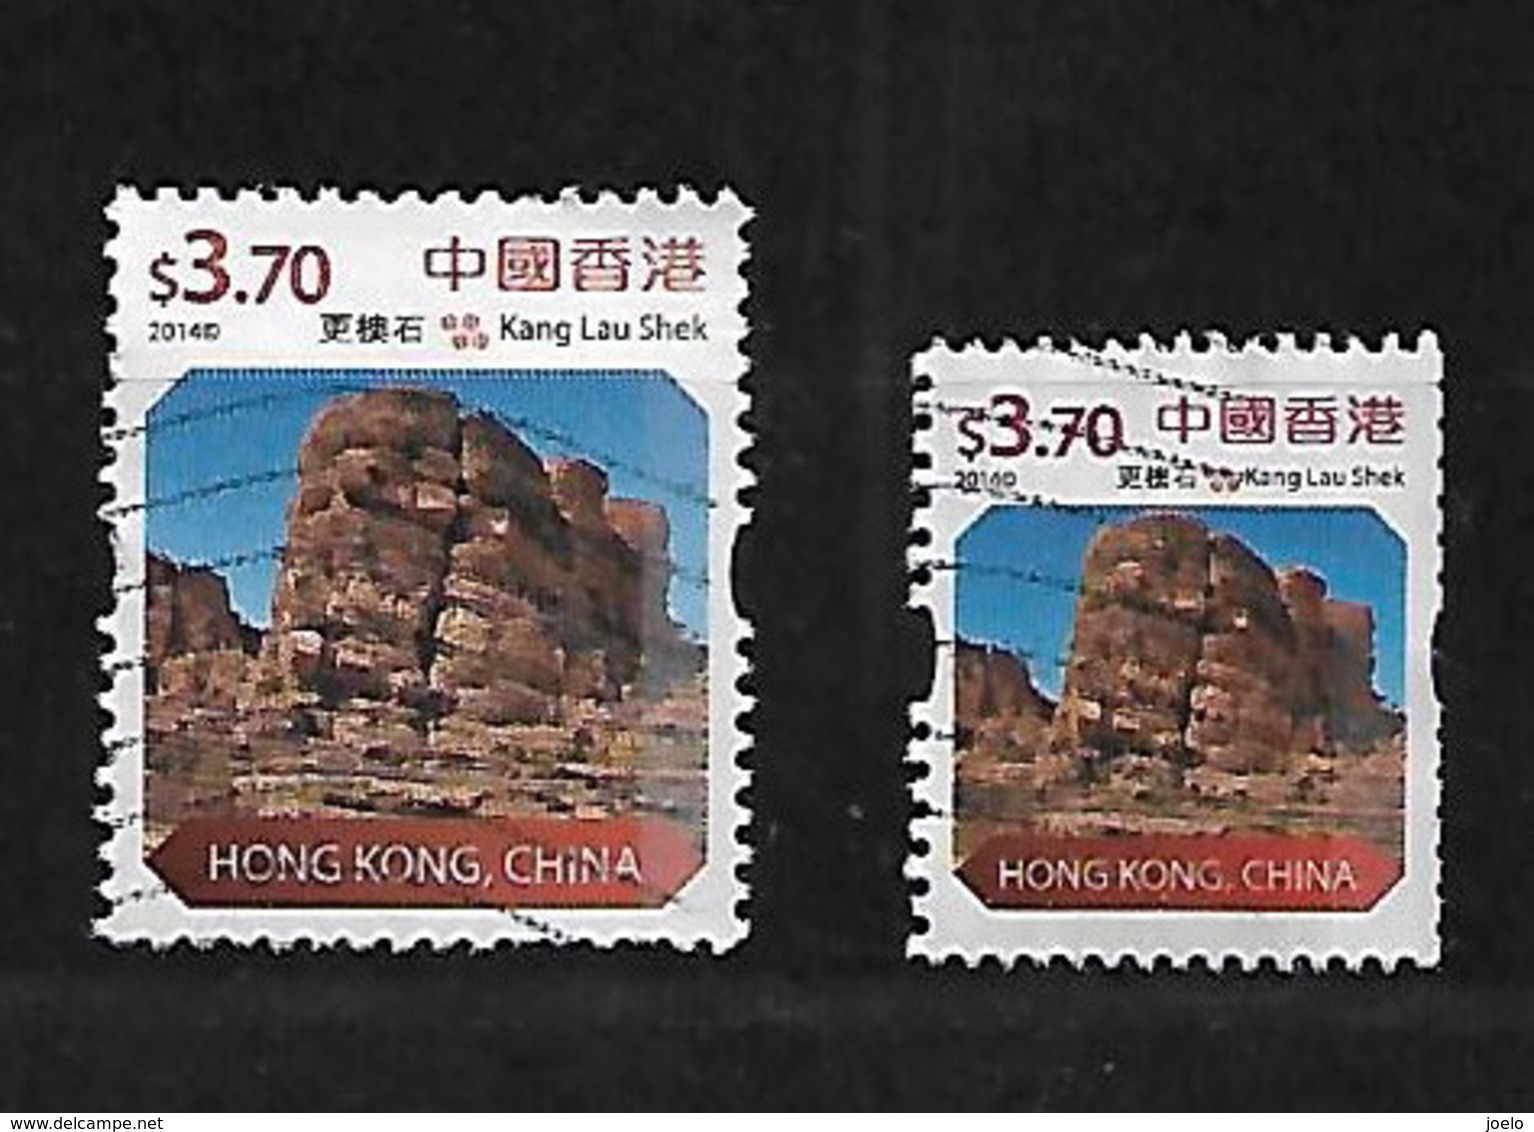 HONG KONG 2014 GLOBAL GEOPARK KANG LAU SHEK PAIR - Used Stamps